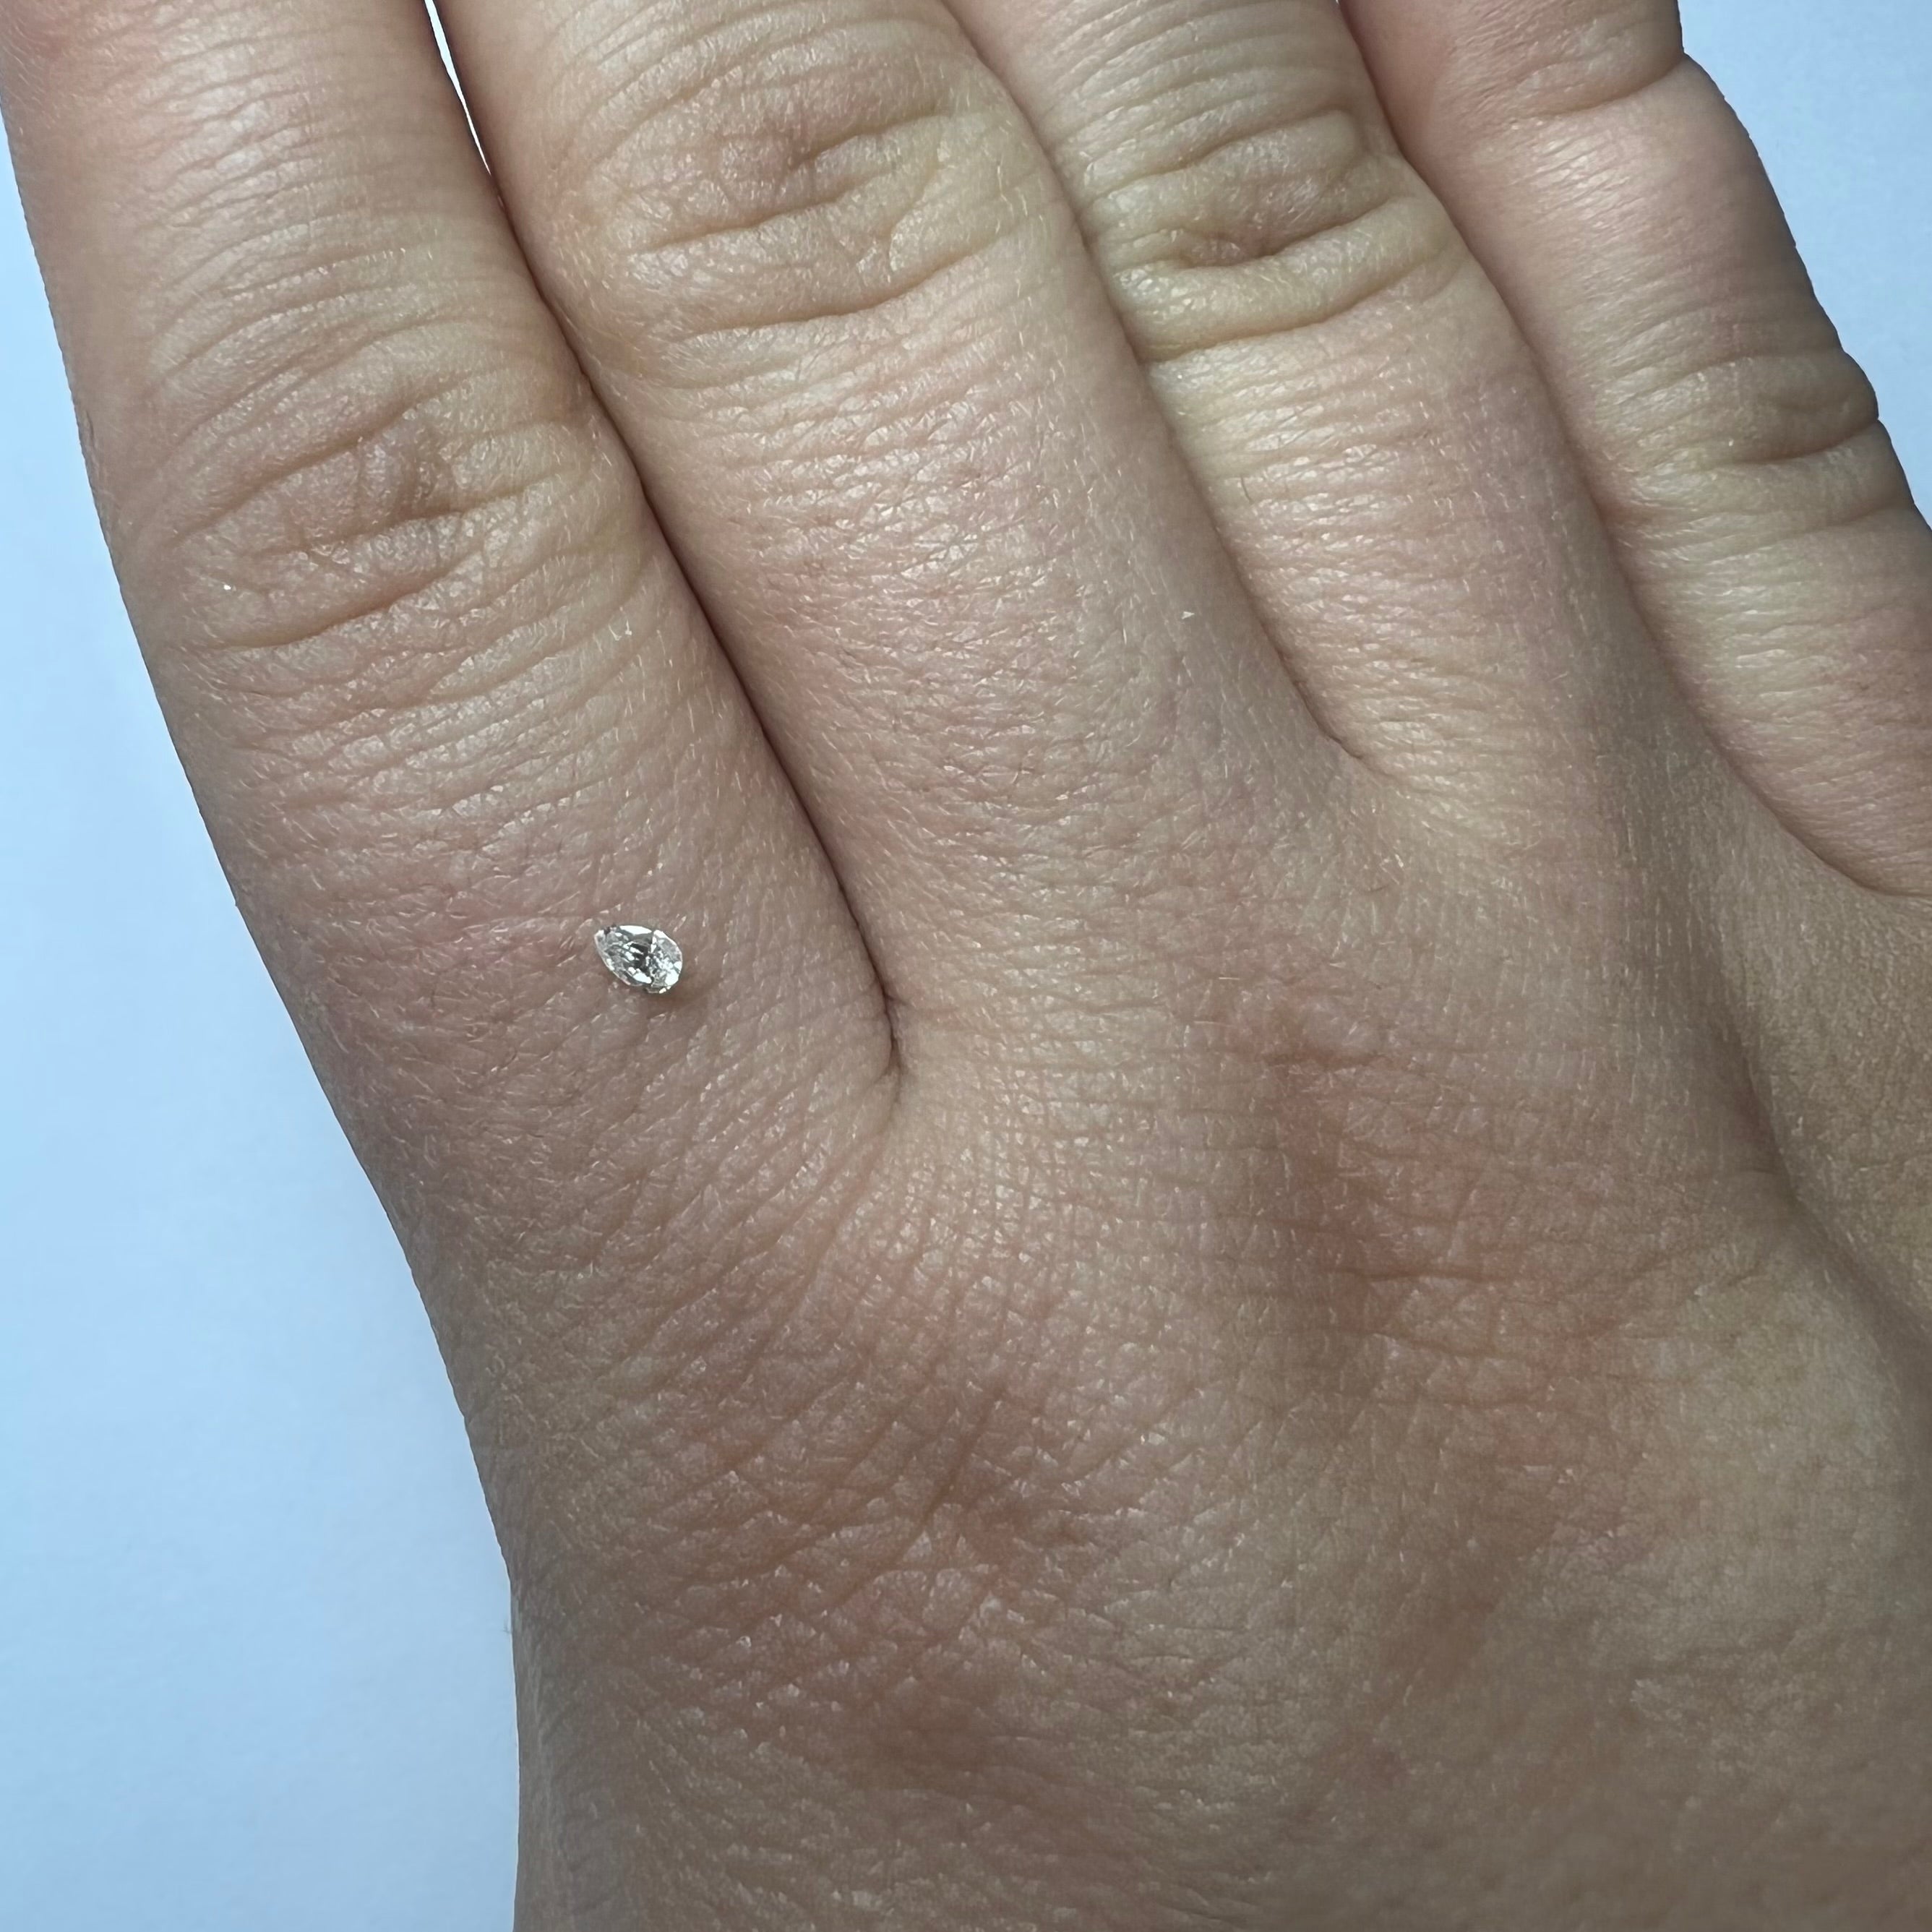 .065CT Pear Diamond K I1 3.17x2.26x1.47mm Natural Earth mined